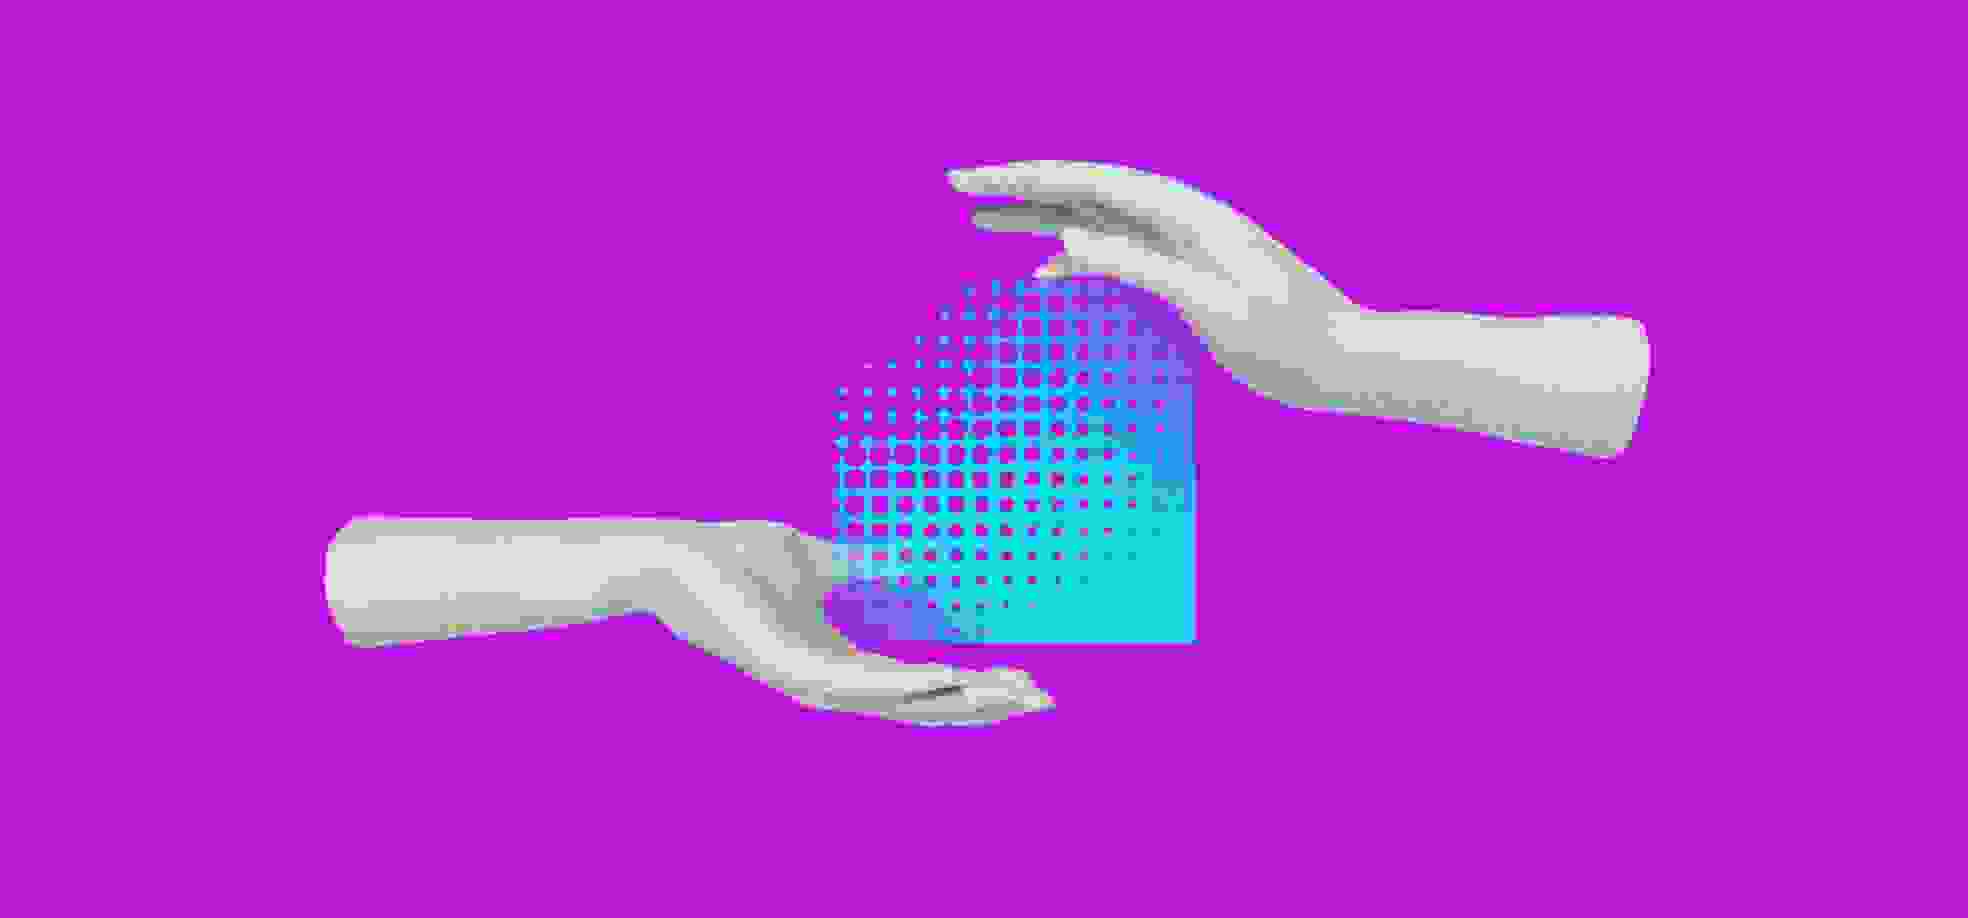 Two hands illustration